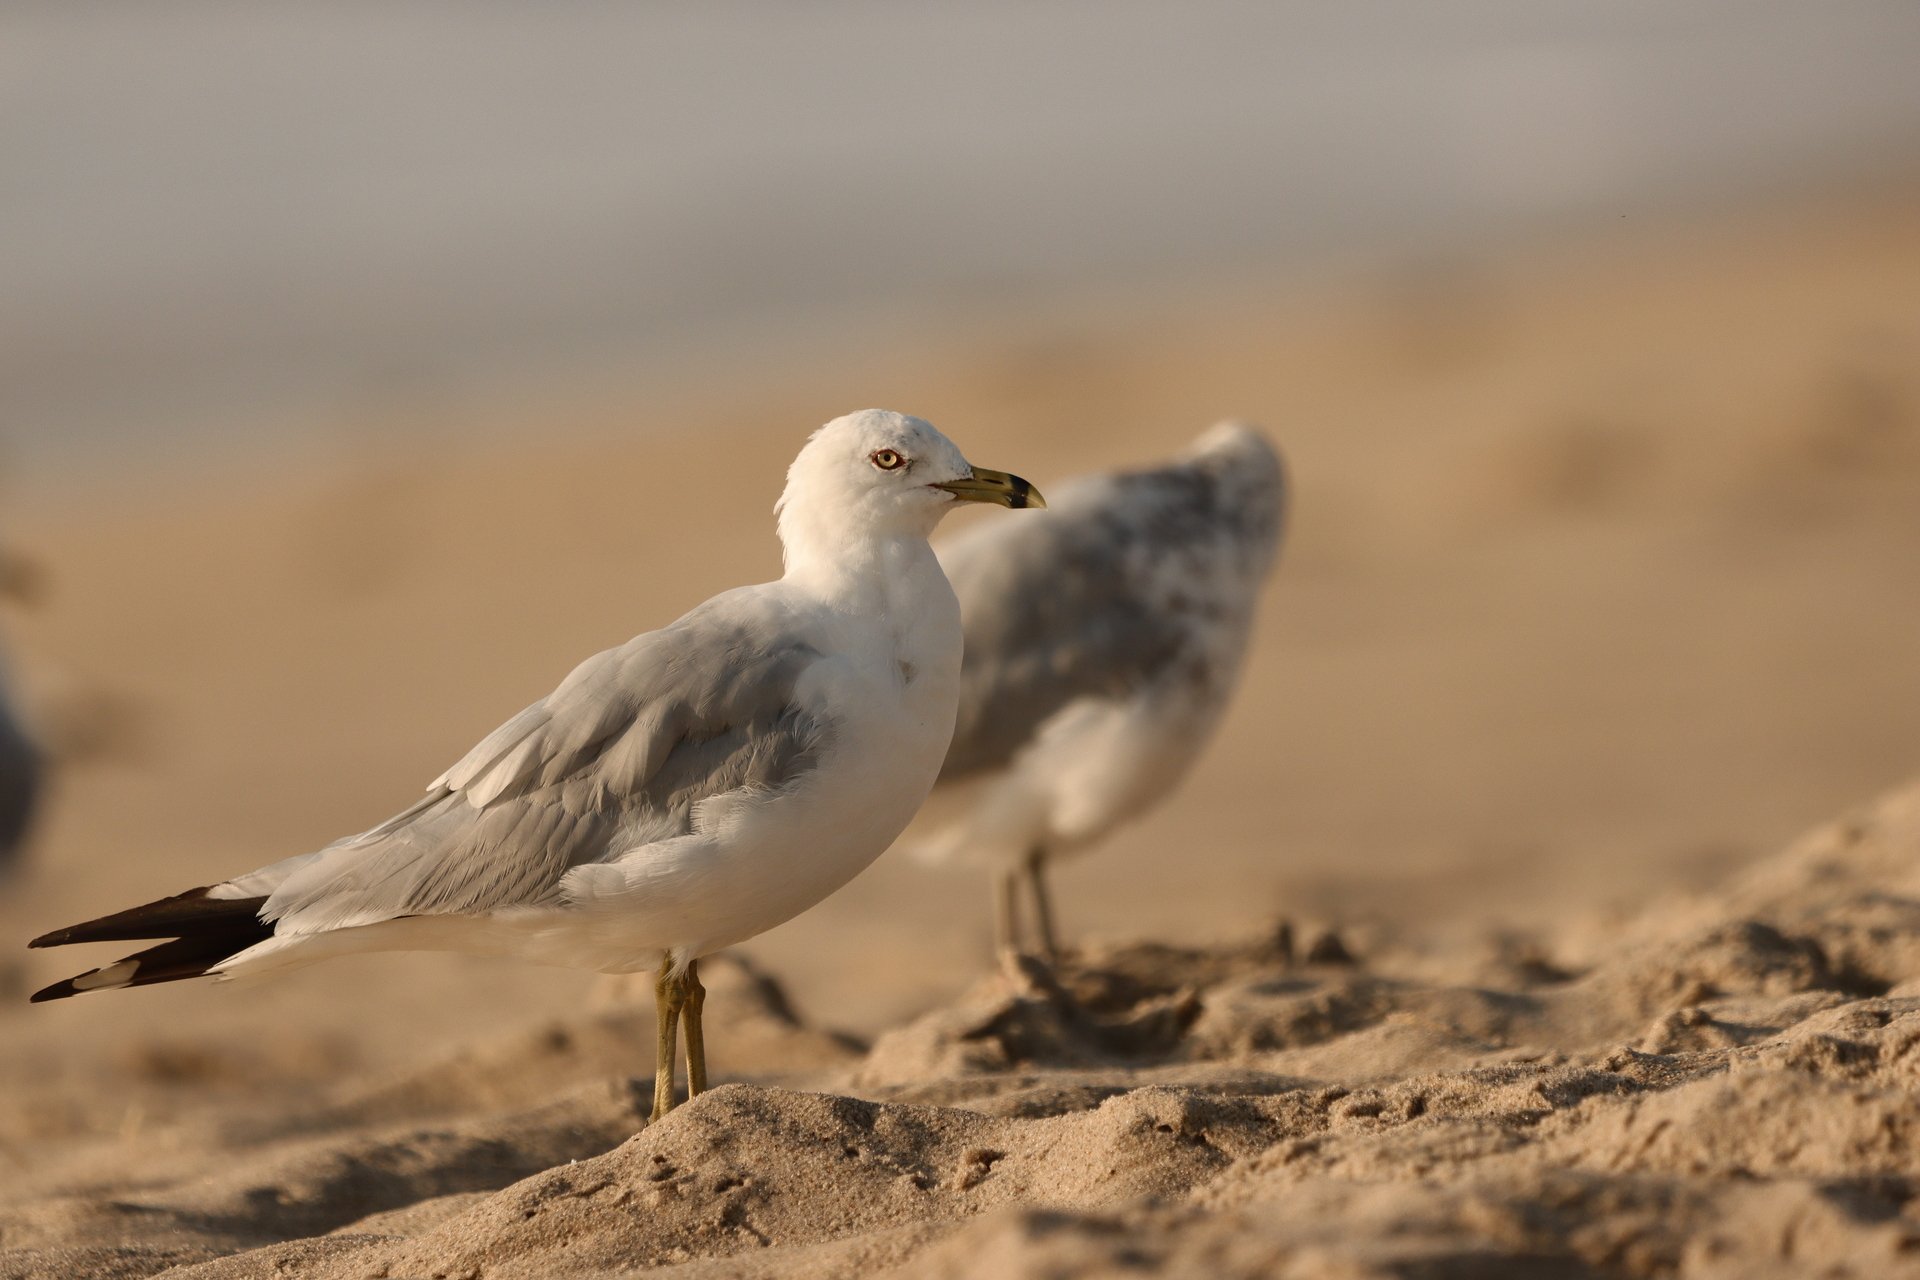 Ring-billed Gull standing on sand